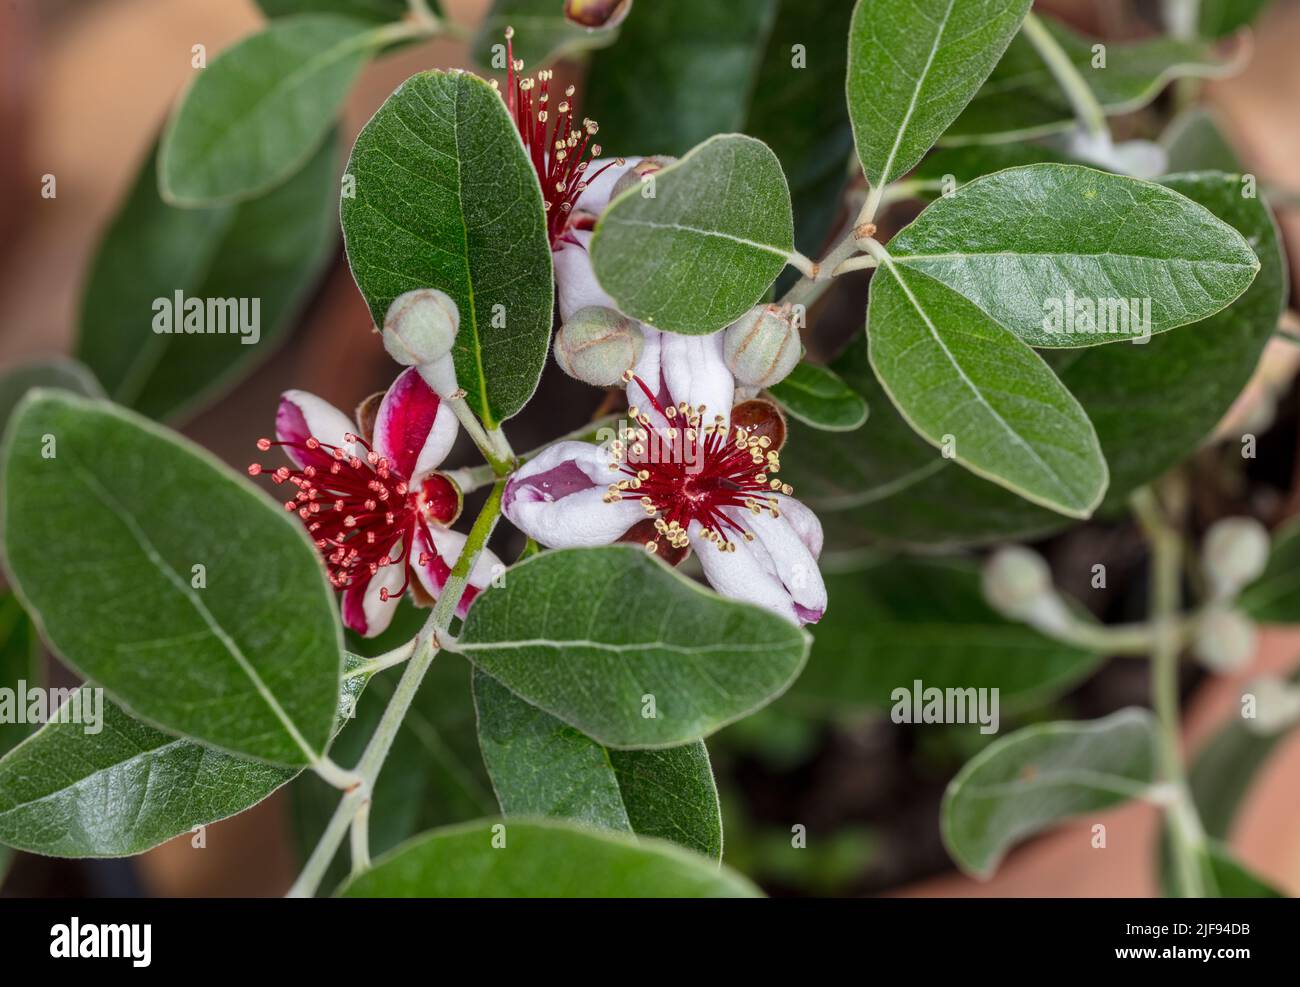 Feijoa, Ananasguava (Acca sellowiana) Stock Photo